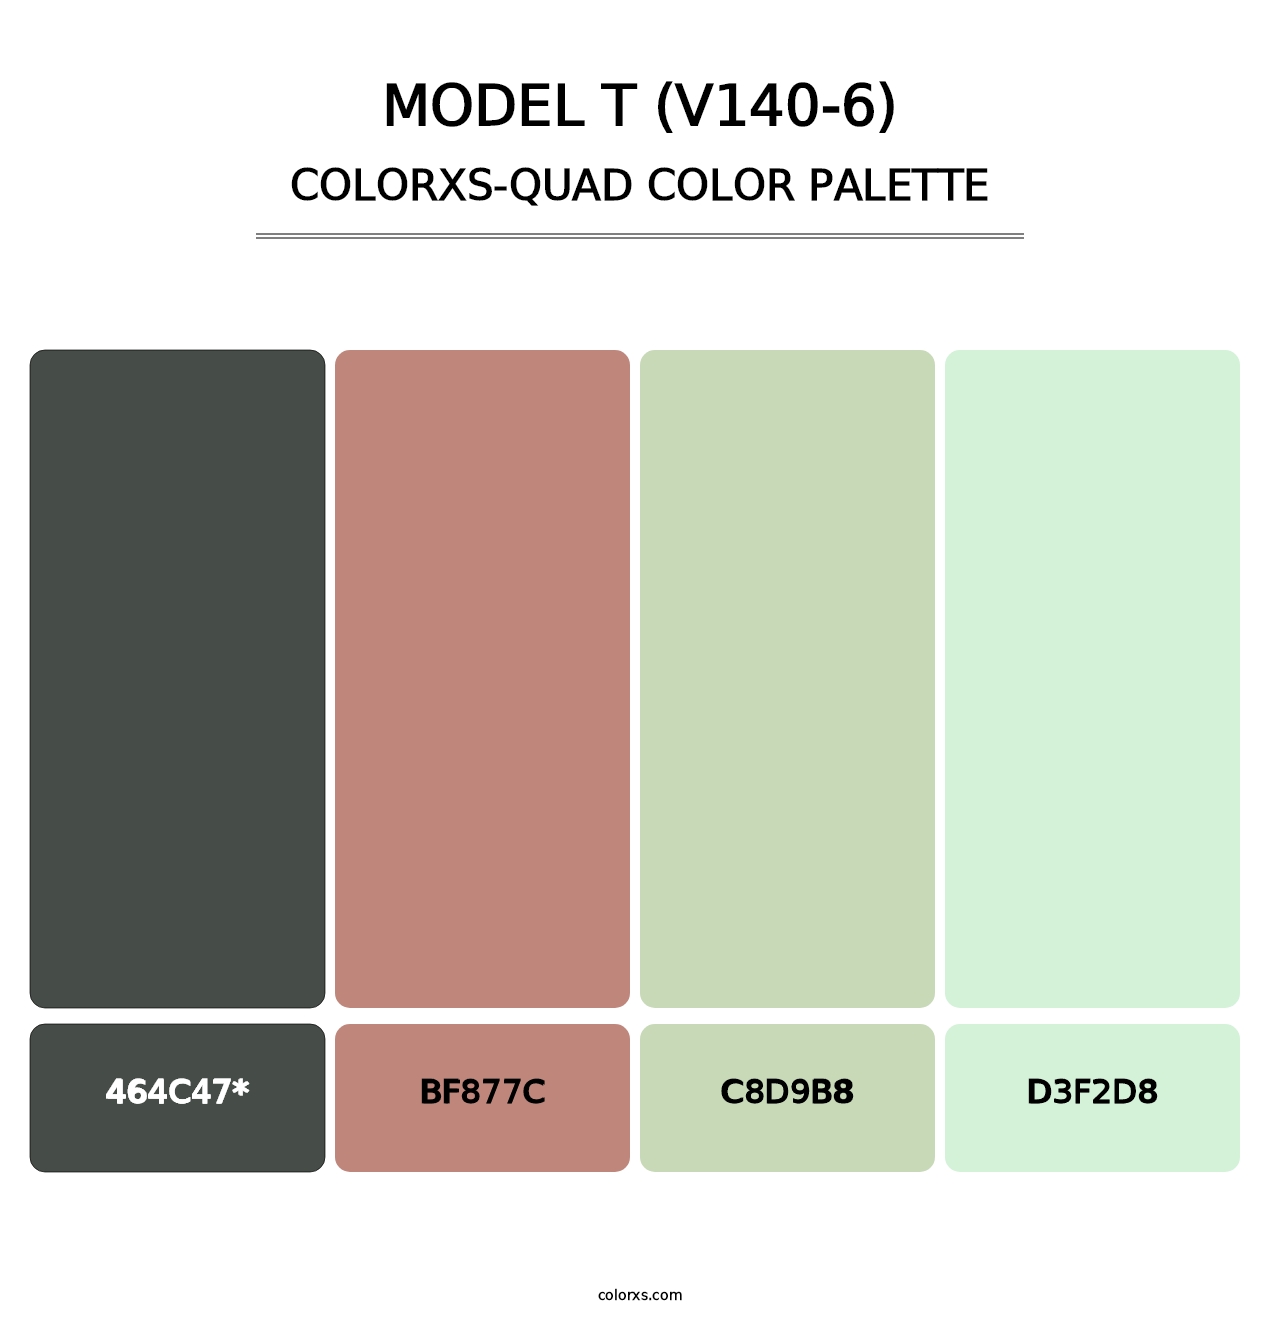 Model T (V140-6) - Colorxs Quad Palette